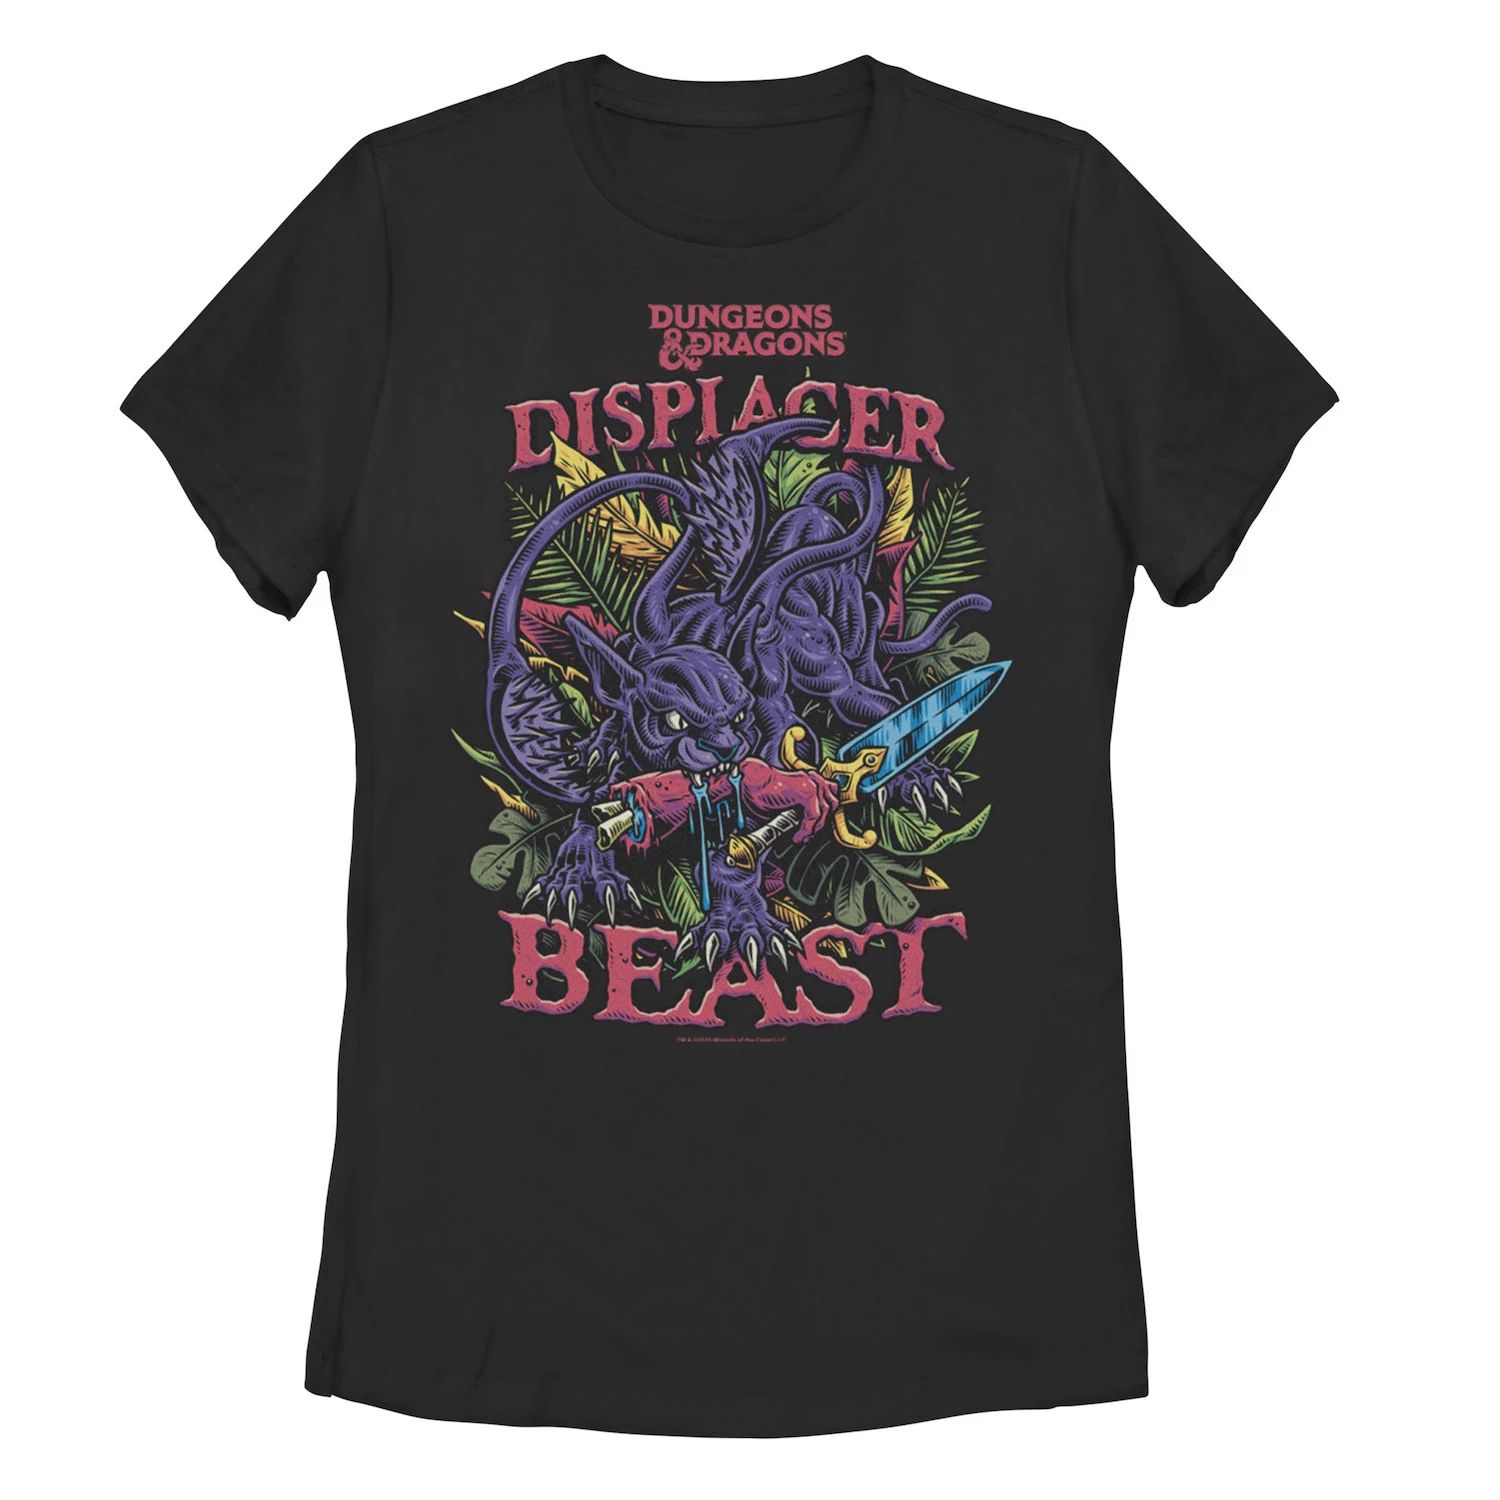 Футболка Displacer Beast с рисунком Dungeons & Dragons для юниоров Licensed Character цена и фото